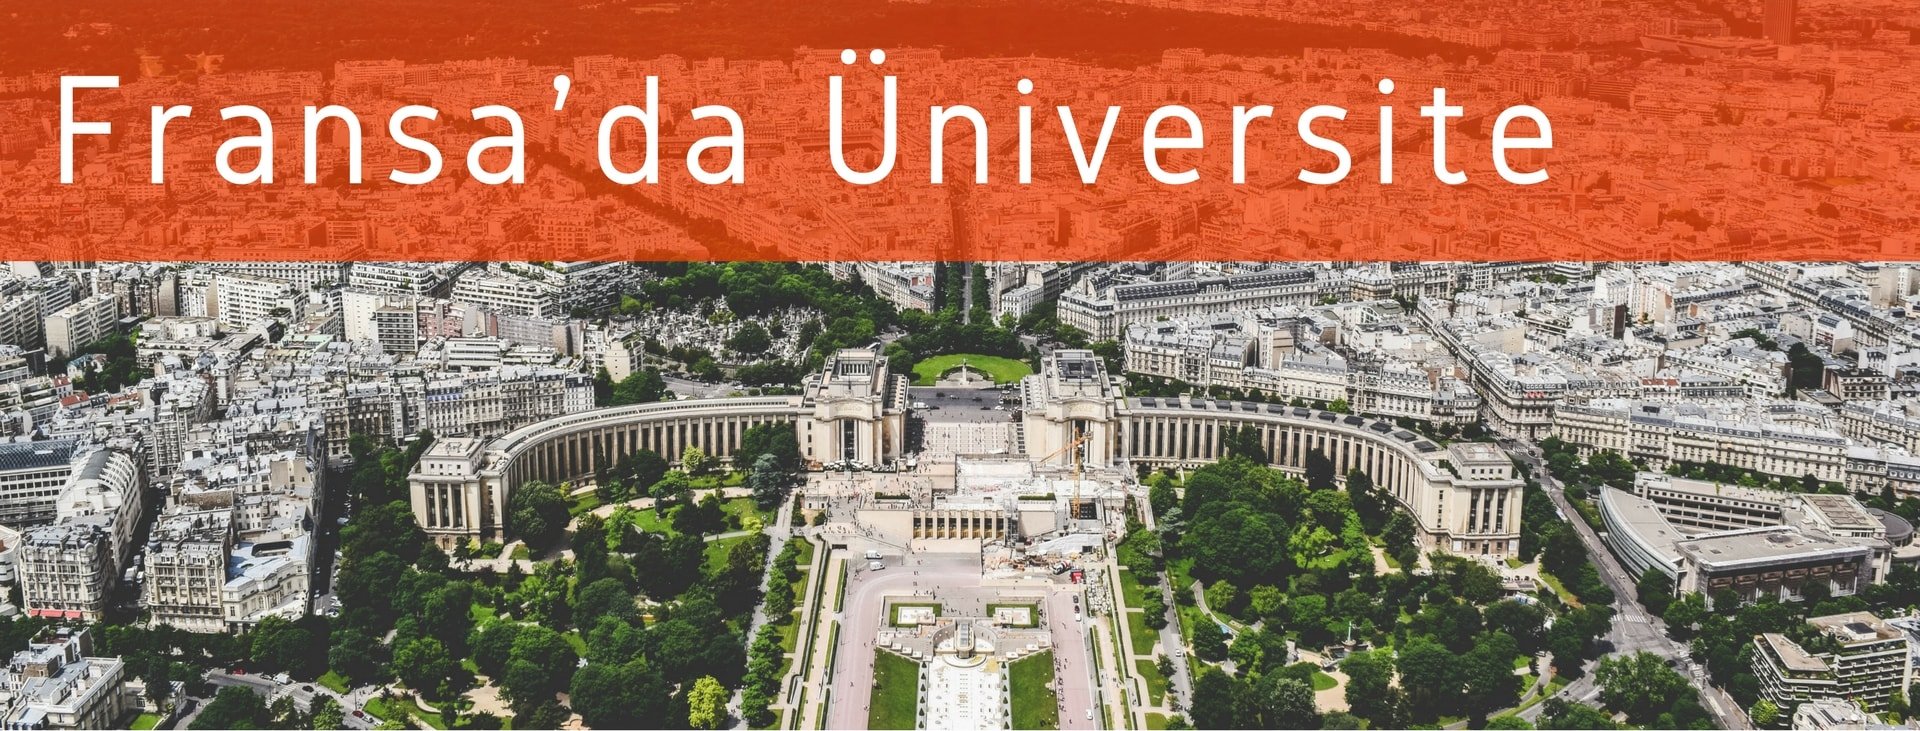 fransada-universite